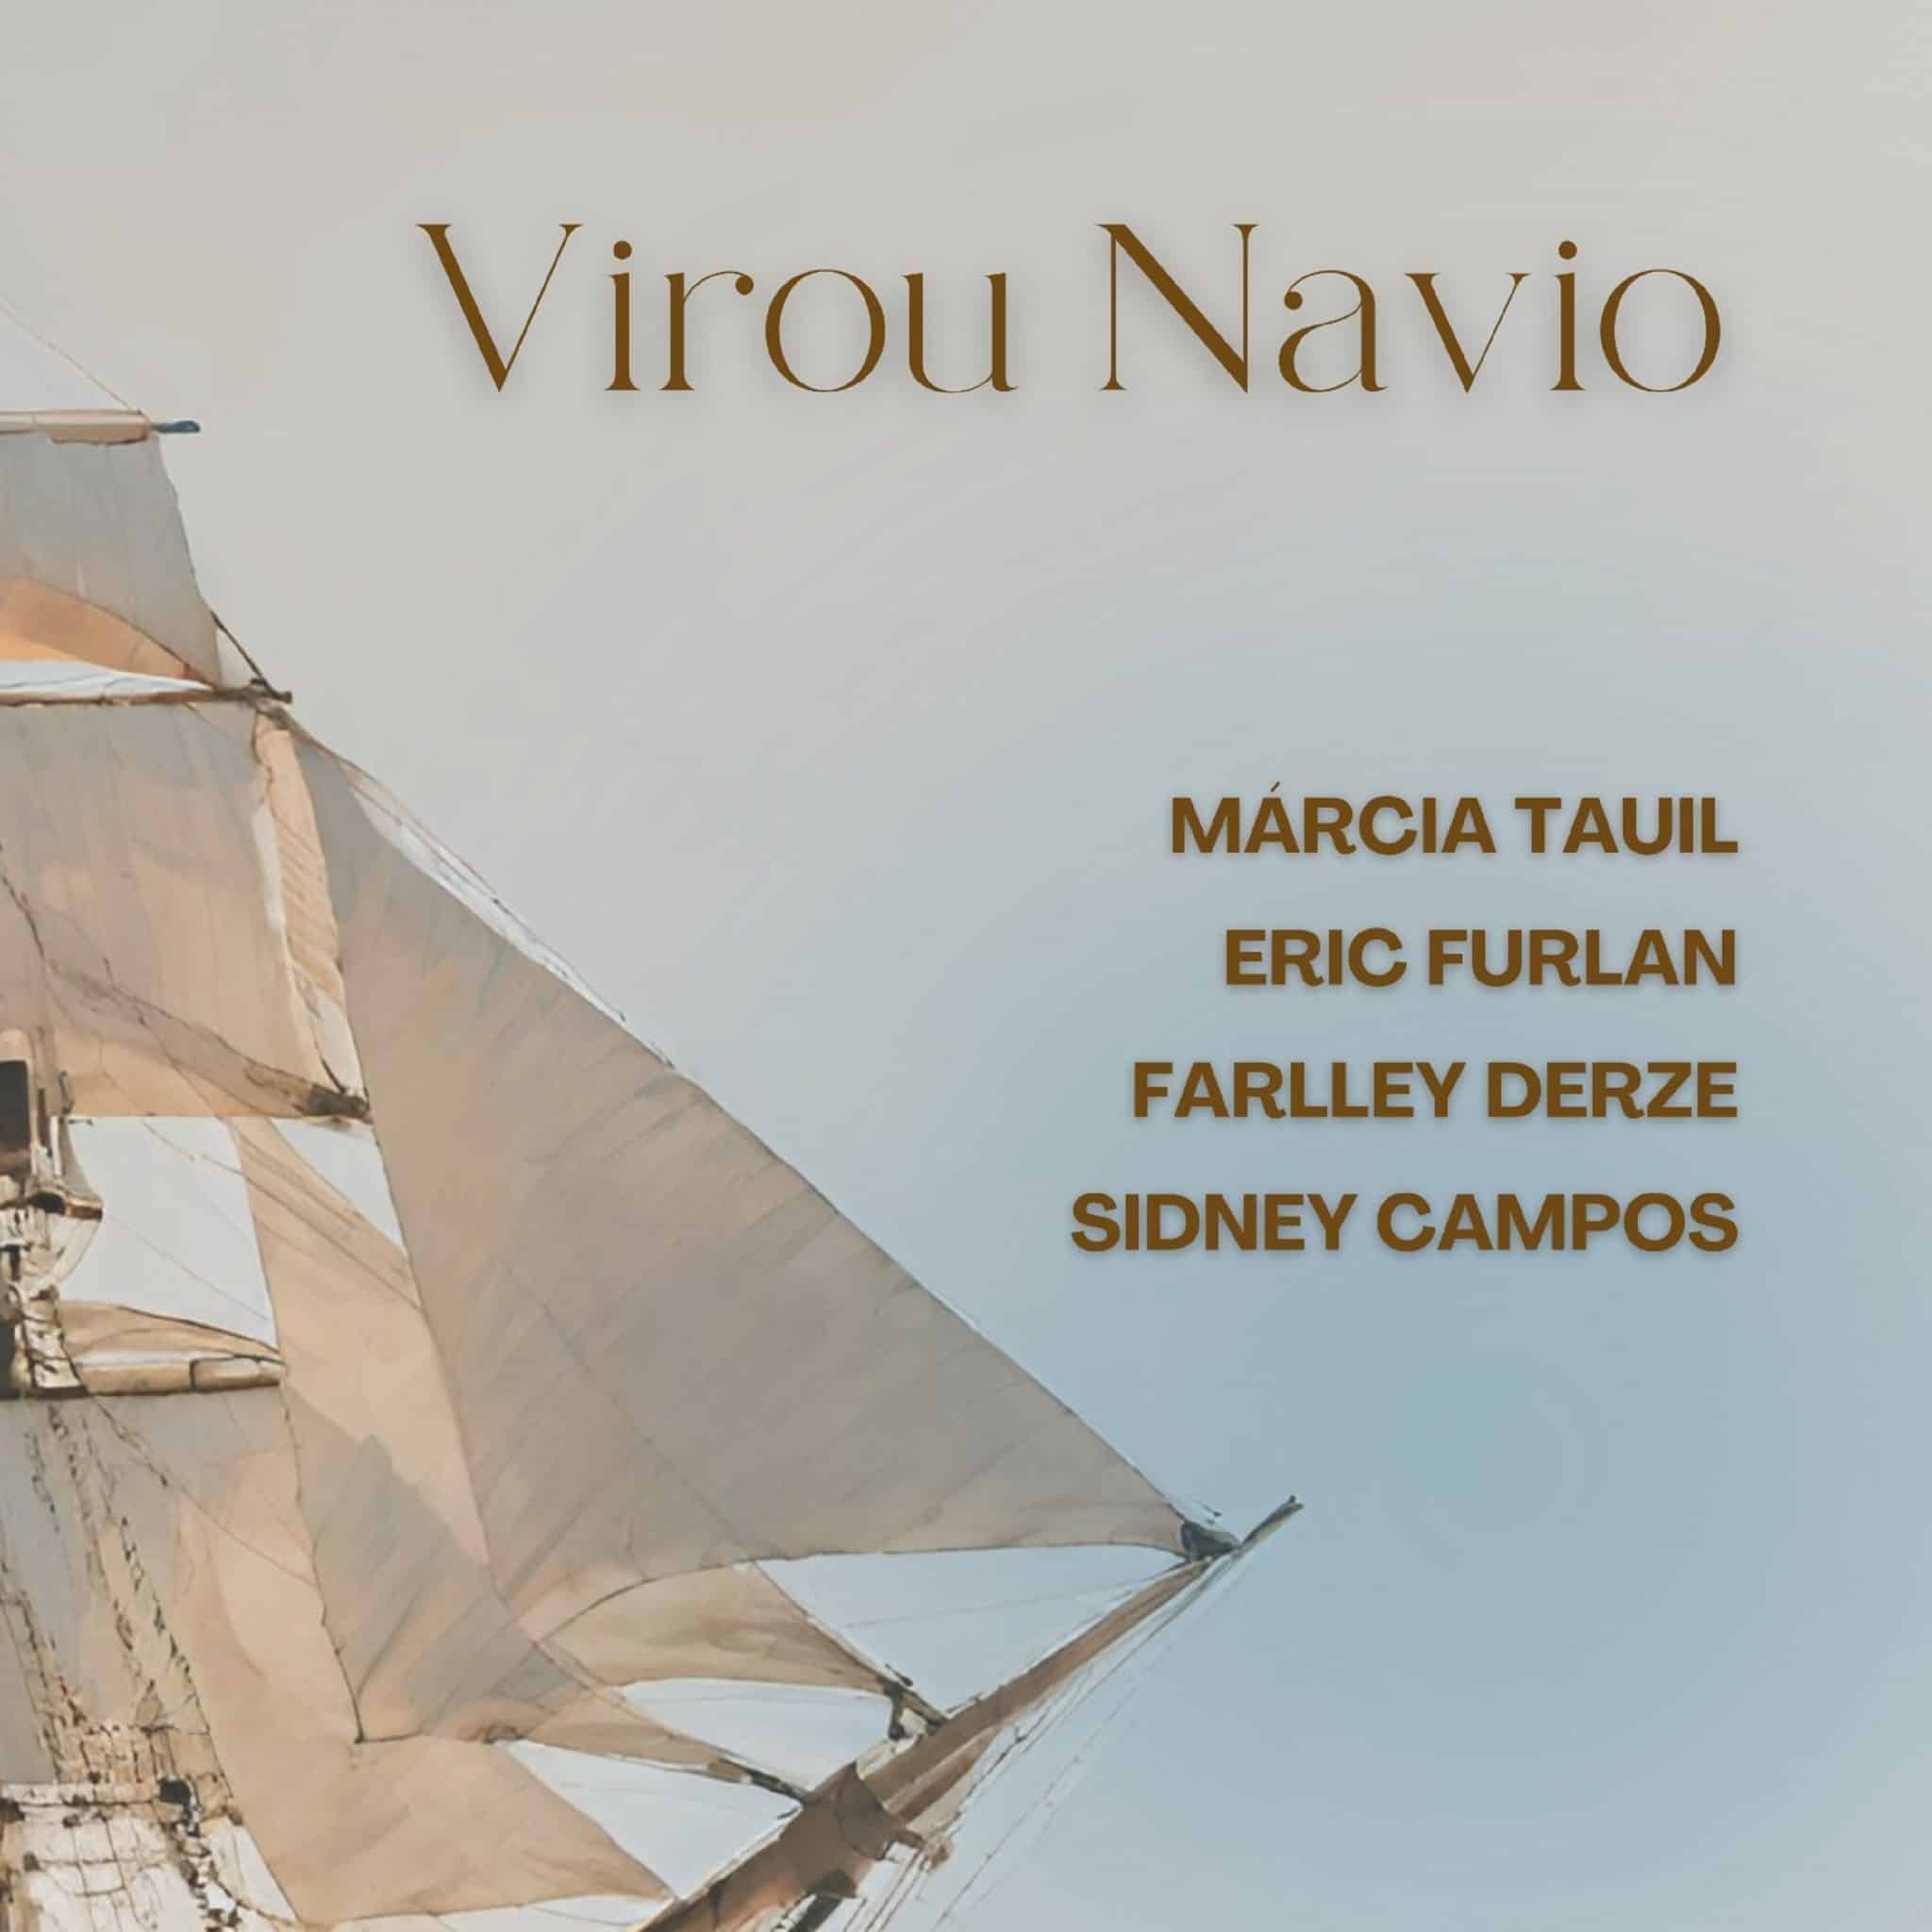 revistaprosaversoearte.com - Márcia Tauil convida Eric Furlan, Farlley Derze e Sidney Campos no single 'Virou Navio'